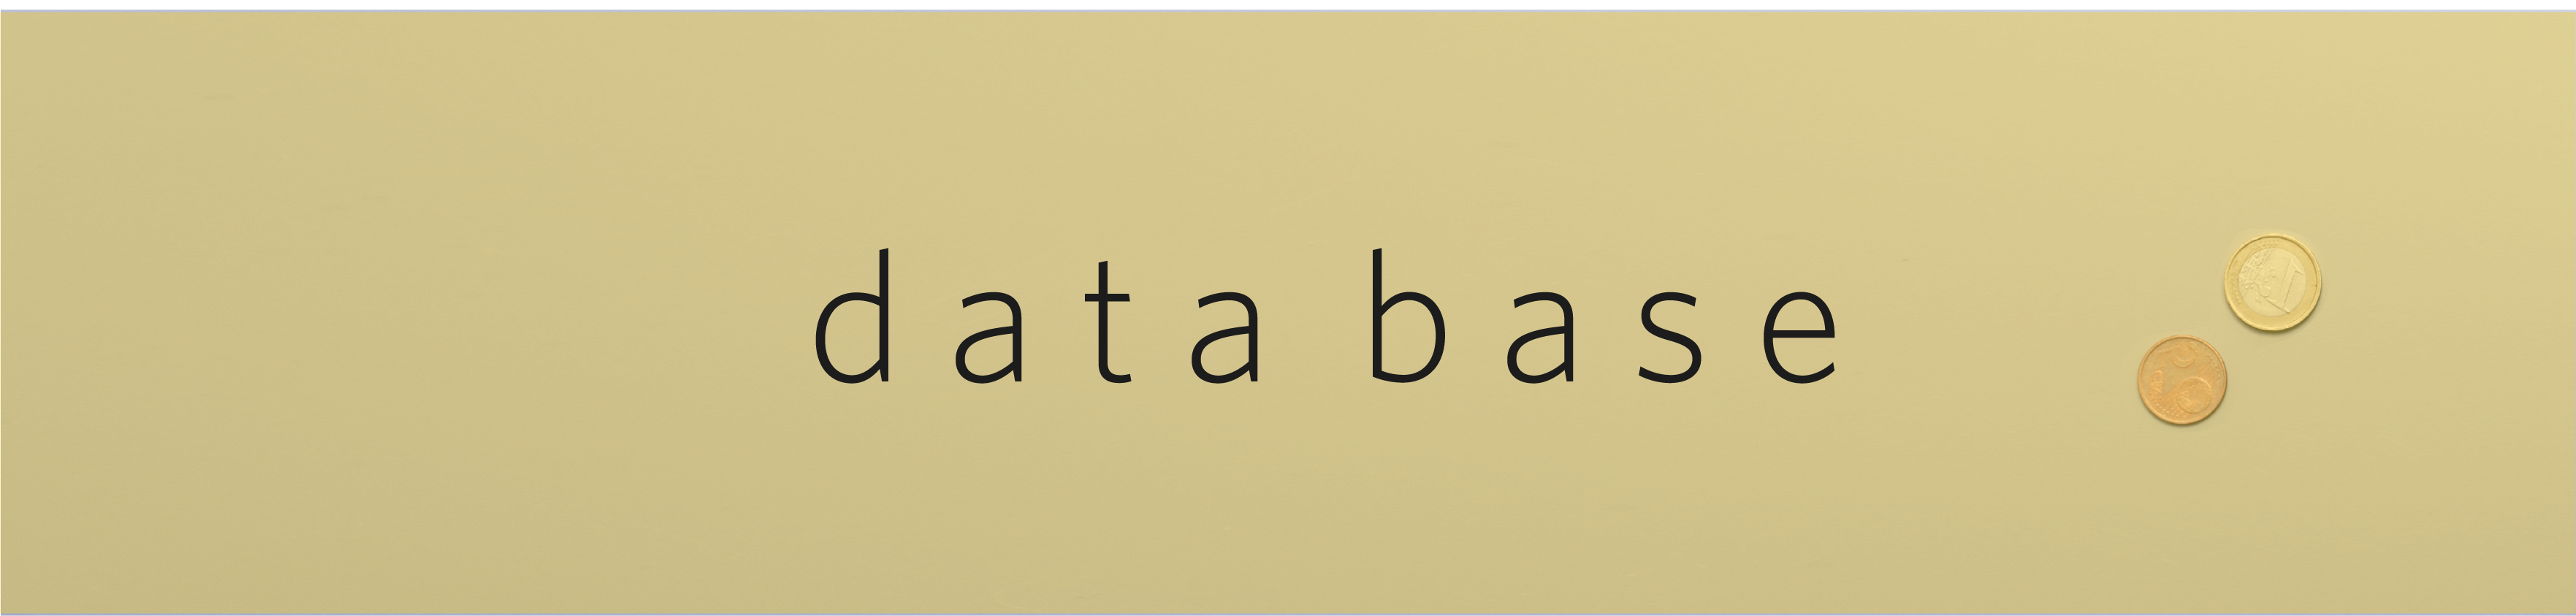 Data Base _ Banner@3x.png